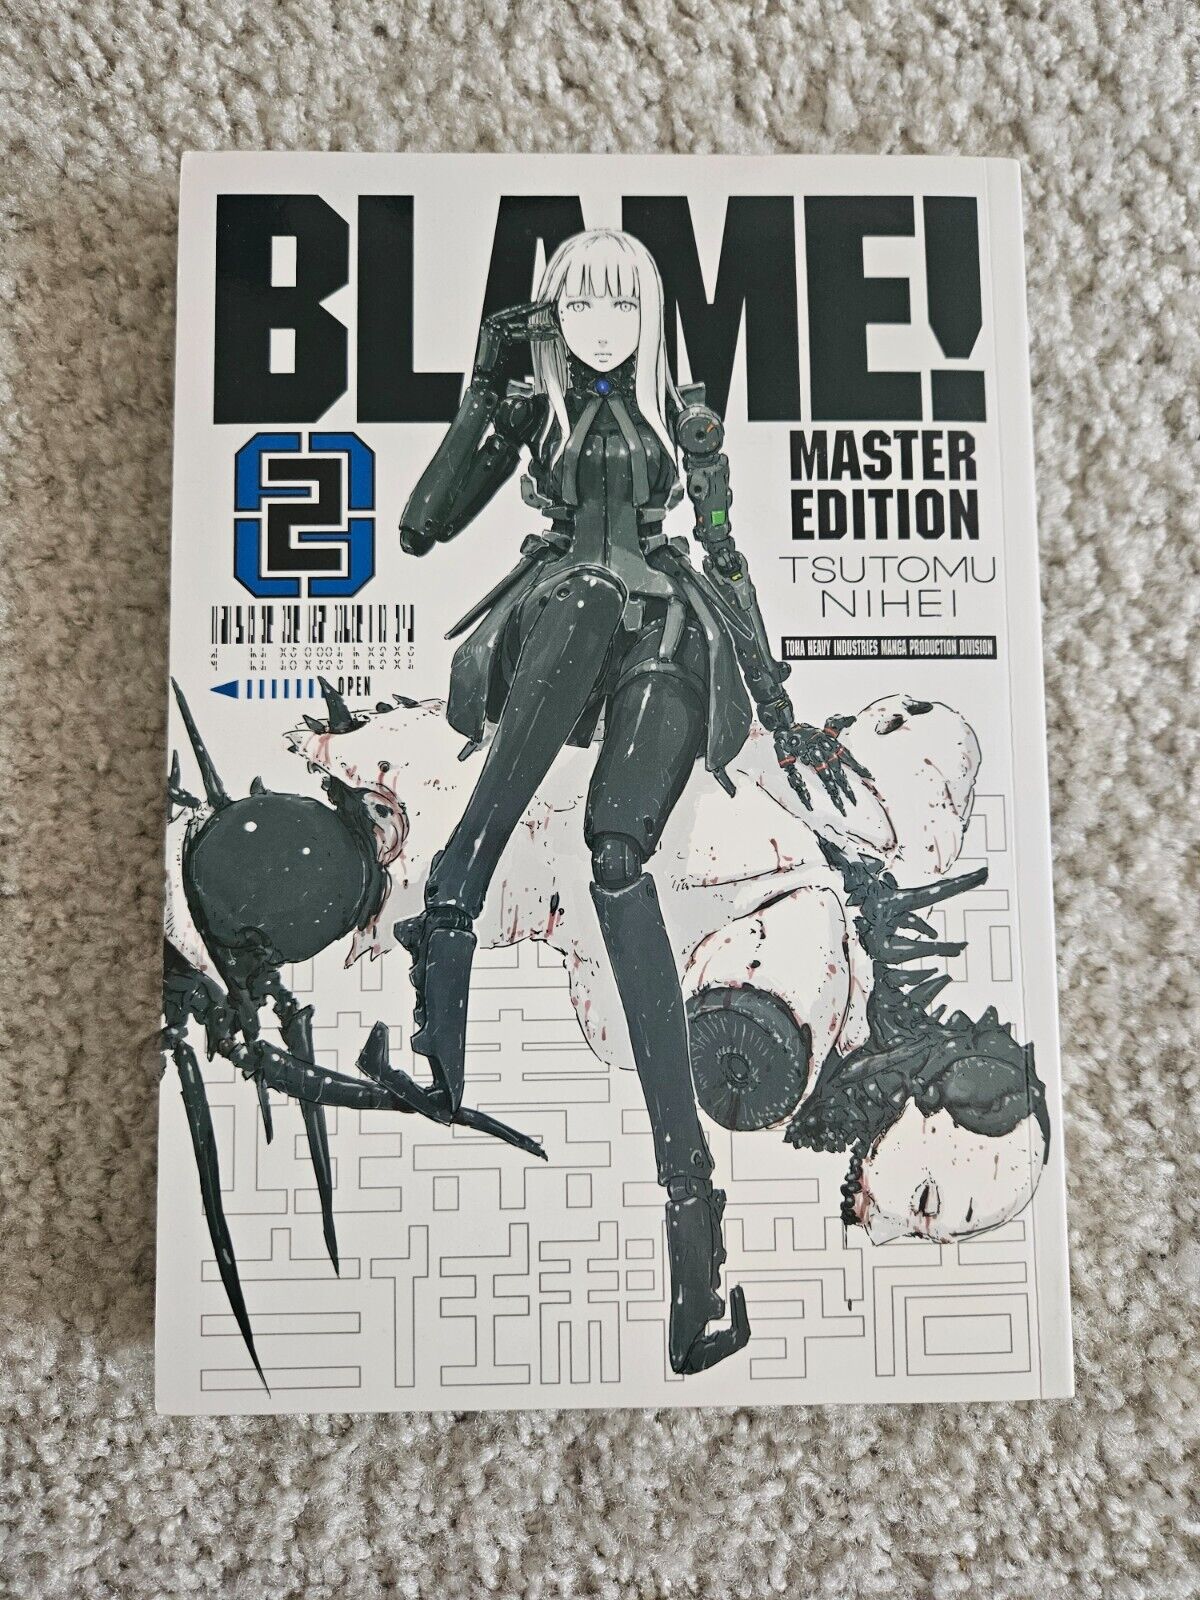 Blame Master Edition Vol 2 Tsutomu Nihei Manga Novel Comic Book